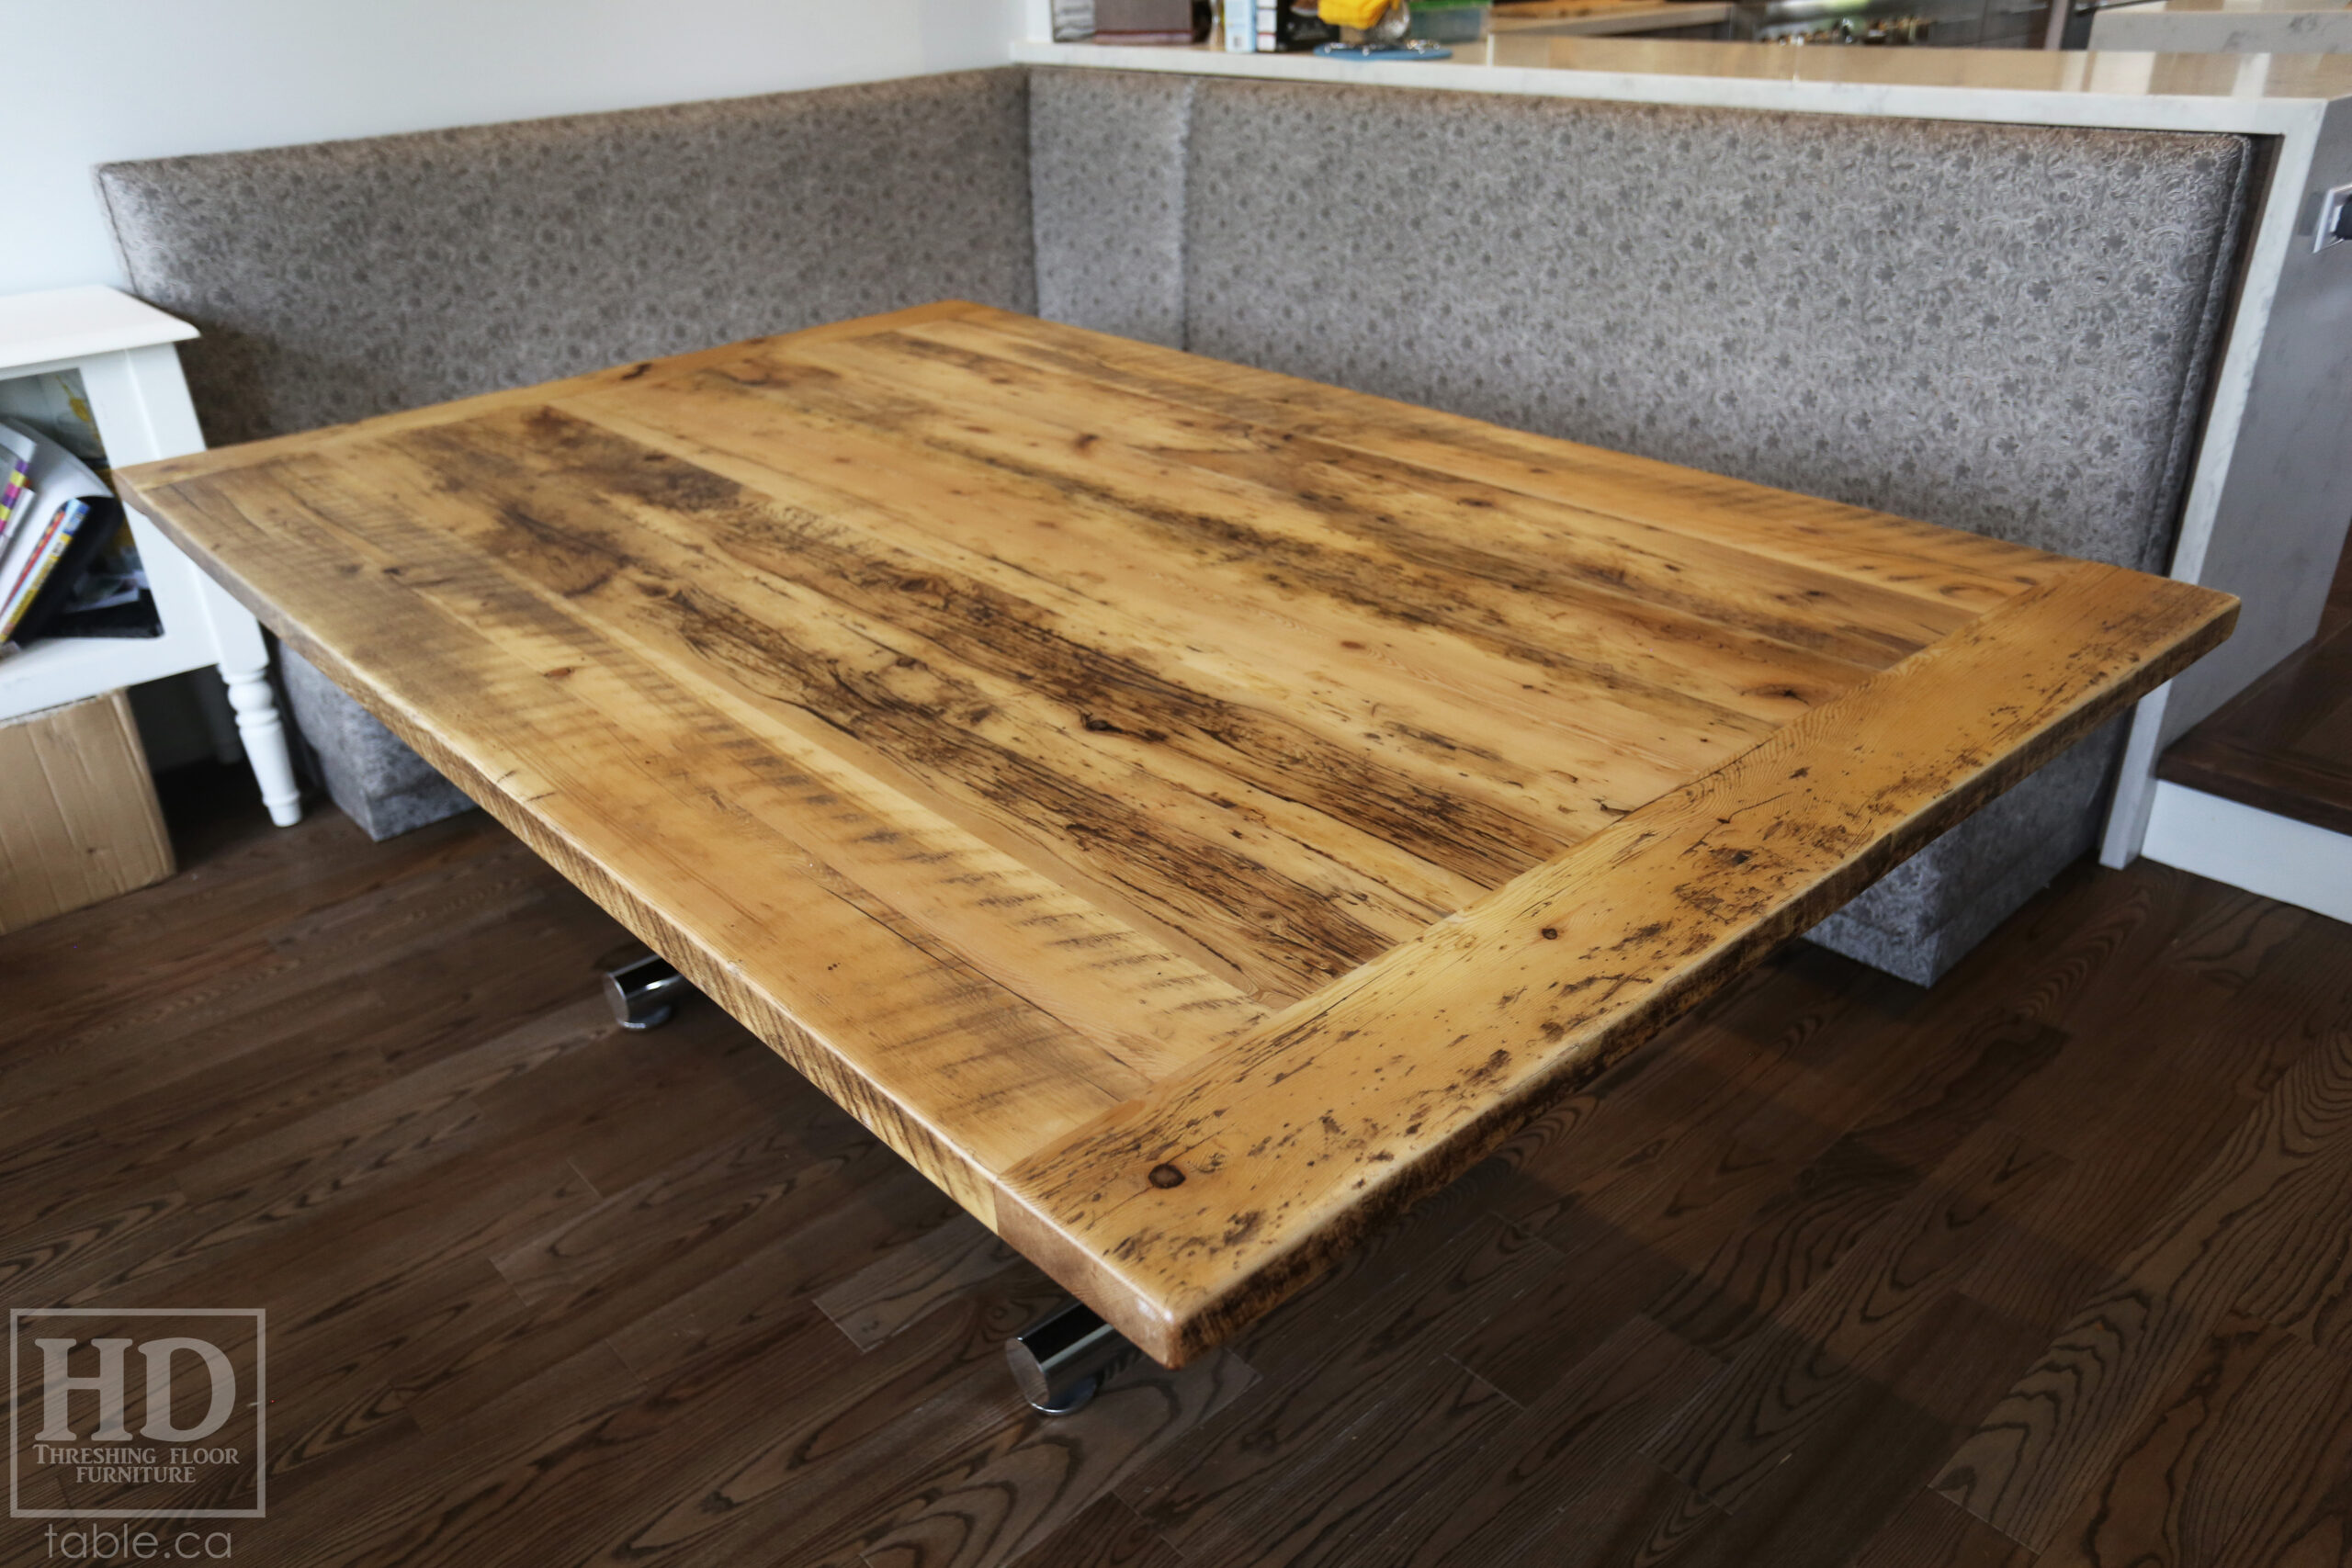 Custom Table Top made from Hemlock Threshing Floor Barn Floor Boards by HD Threshing Floor Furniture / www.table.ca